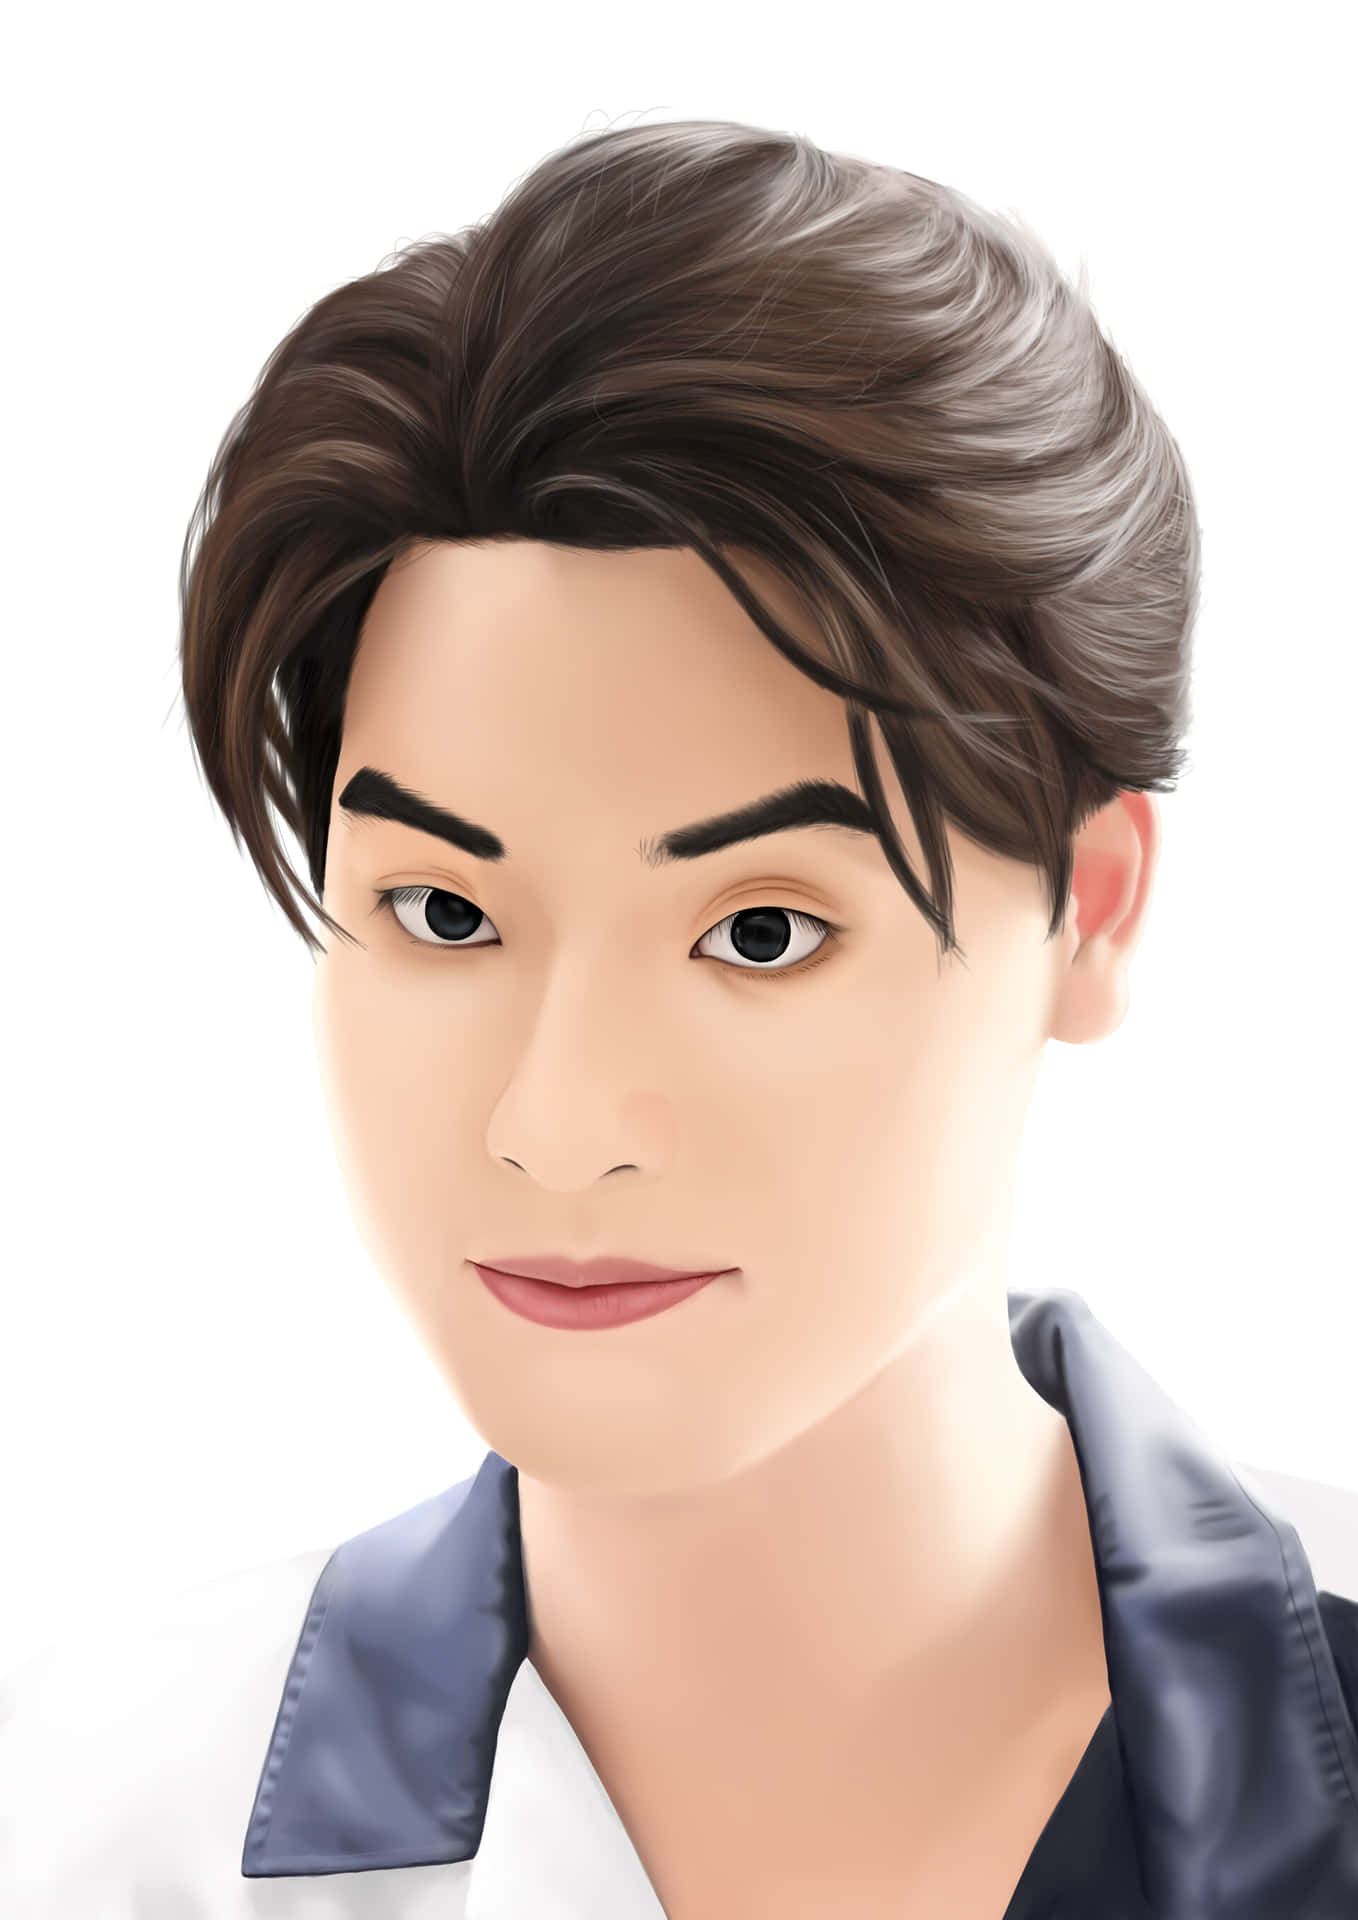 Download Handsome Boy Cartoon Realistic Digital Painting Wallpaper |  